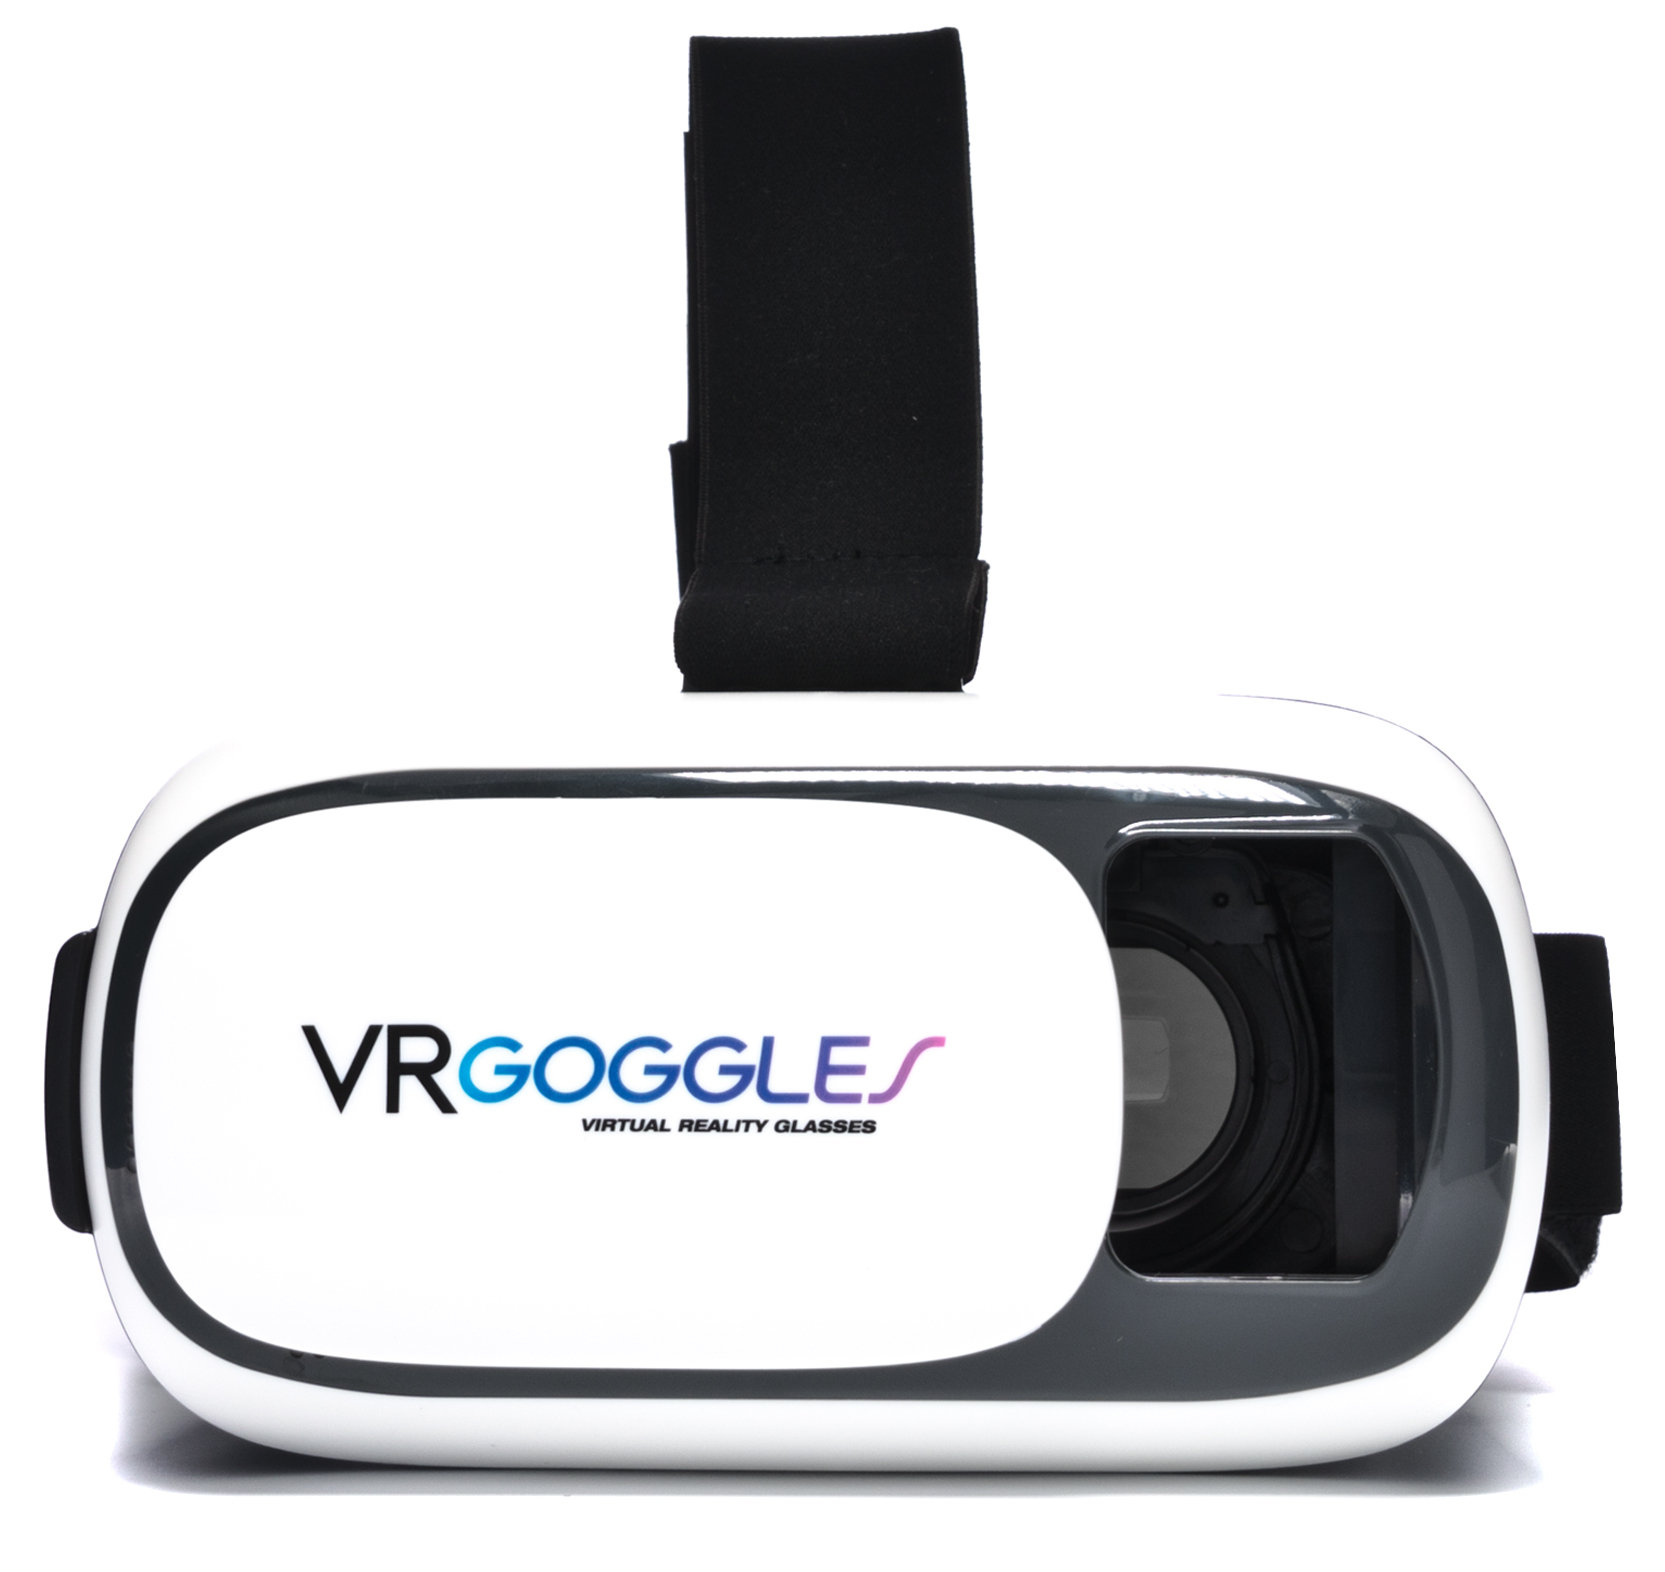 XENIC VR-VIII Gogle VR - niskie ceny i opinie w Media Expert